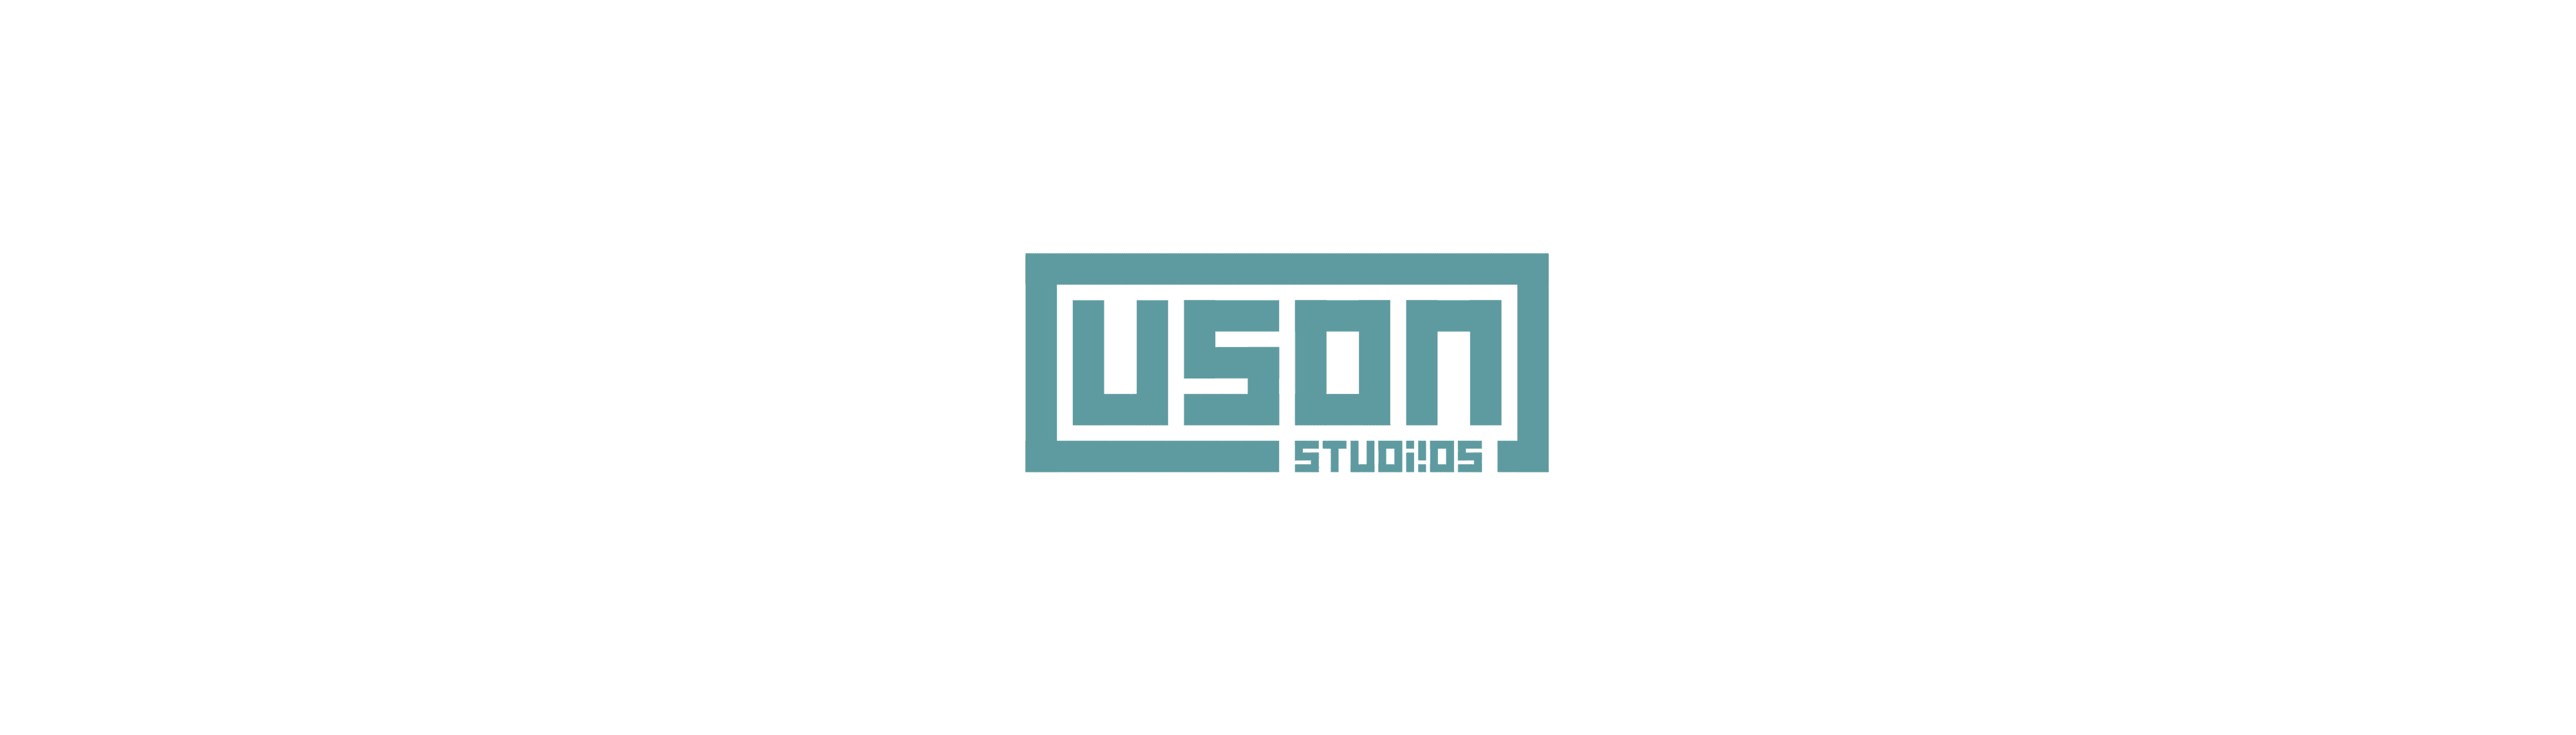 UsonStudios banner